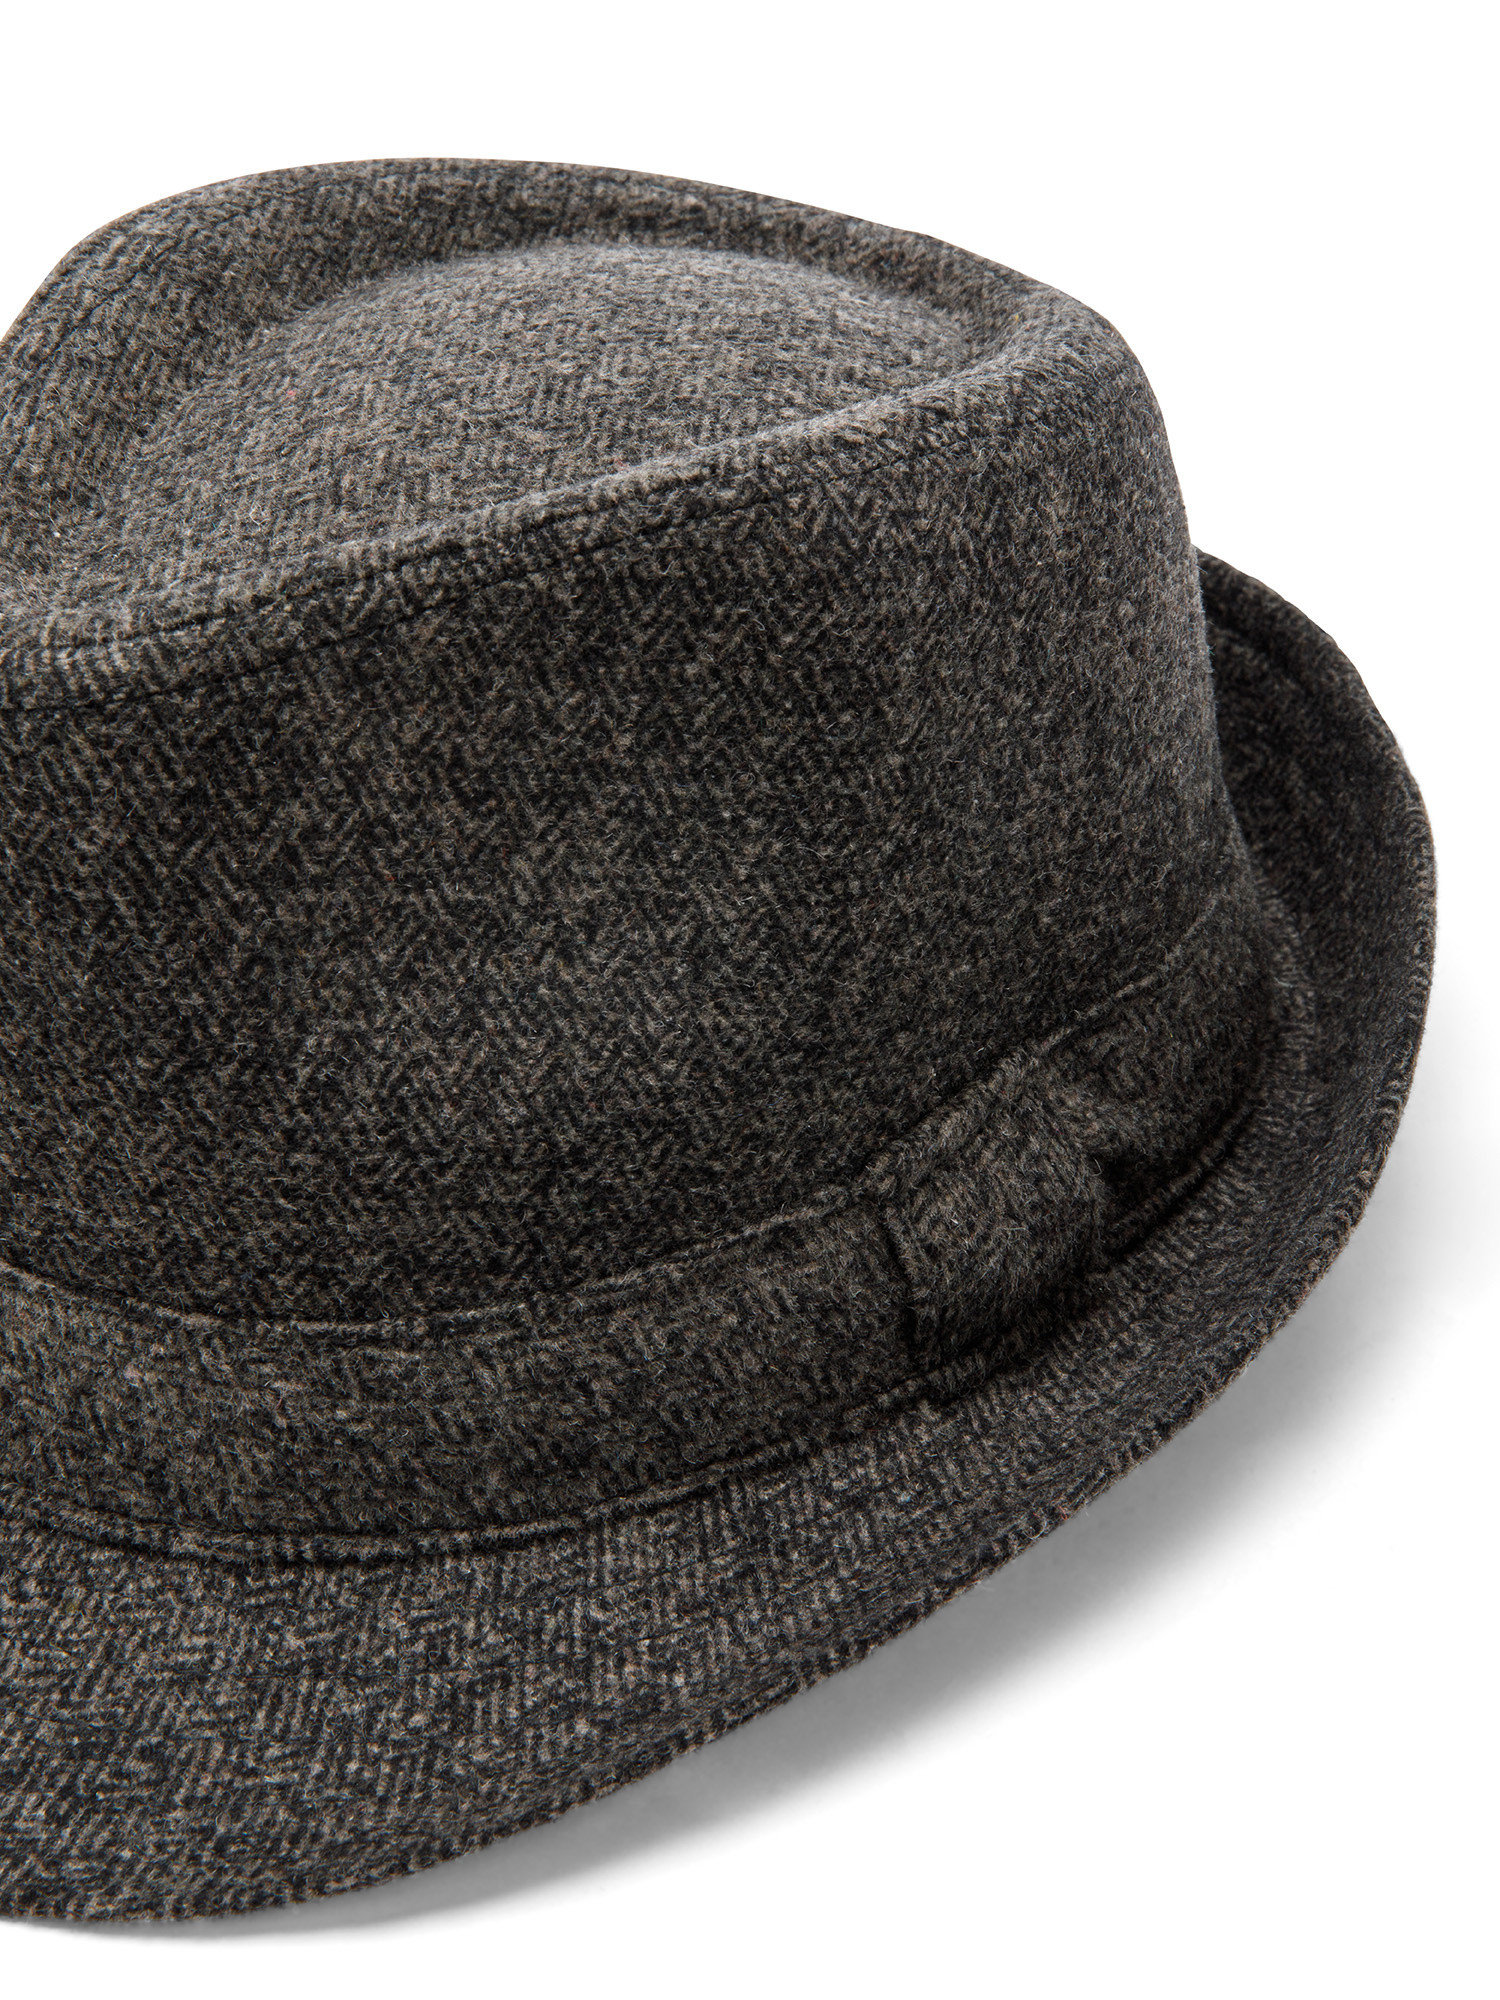 Luca D'Altieri - Barbed alpine hat, Brown, large image number 1